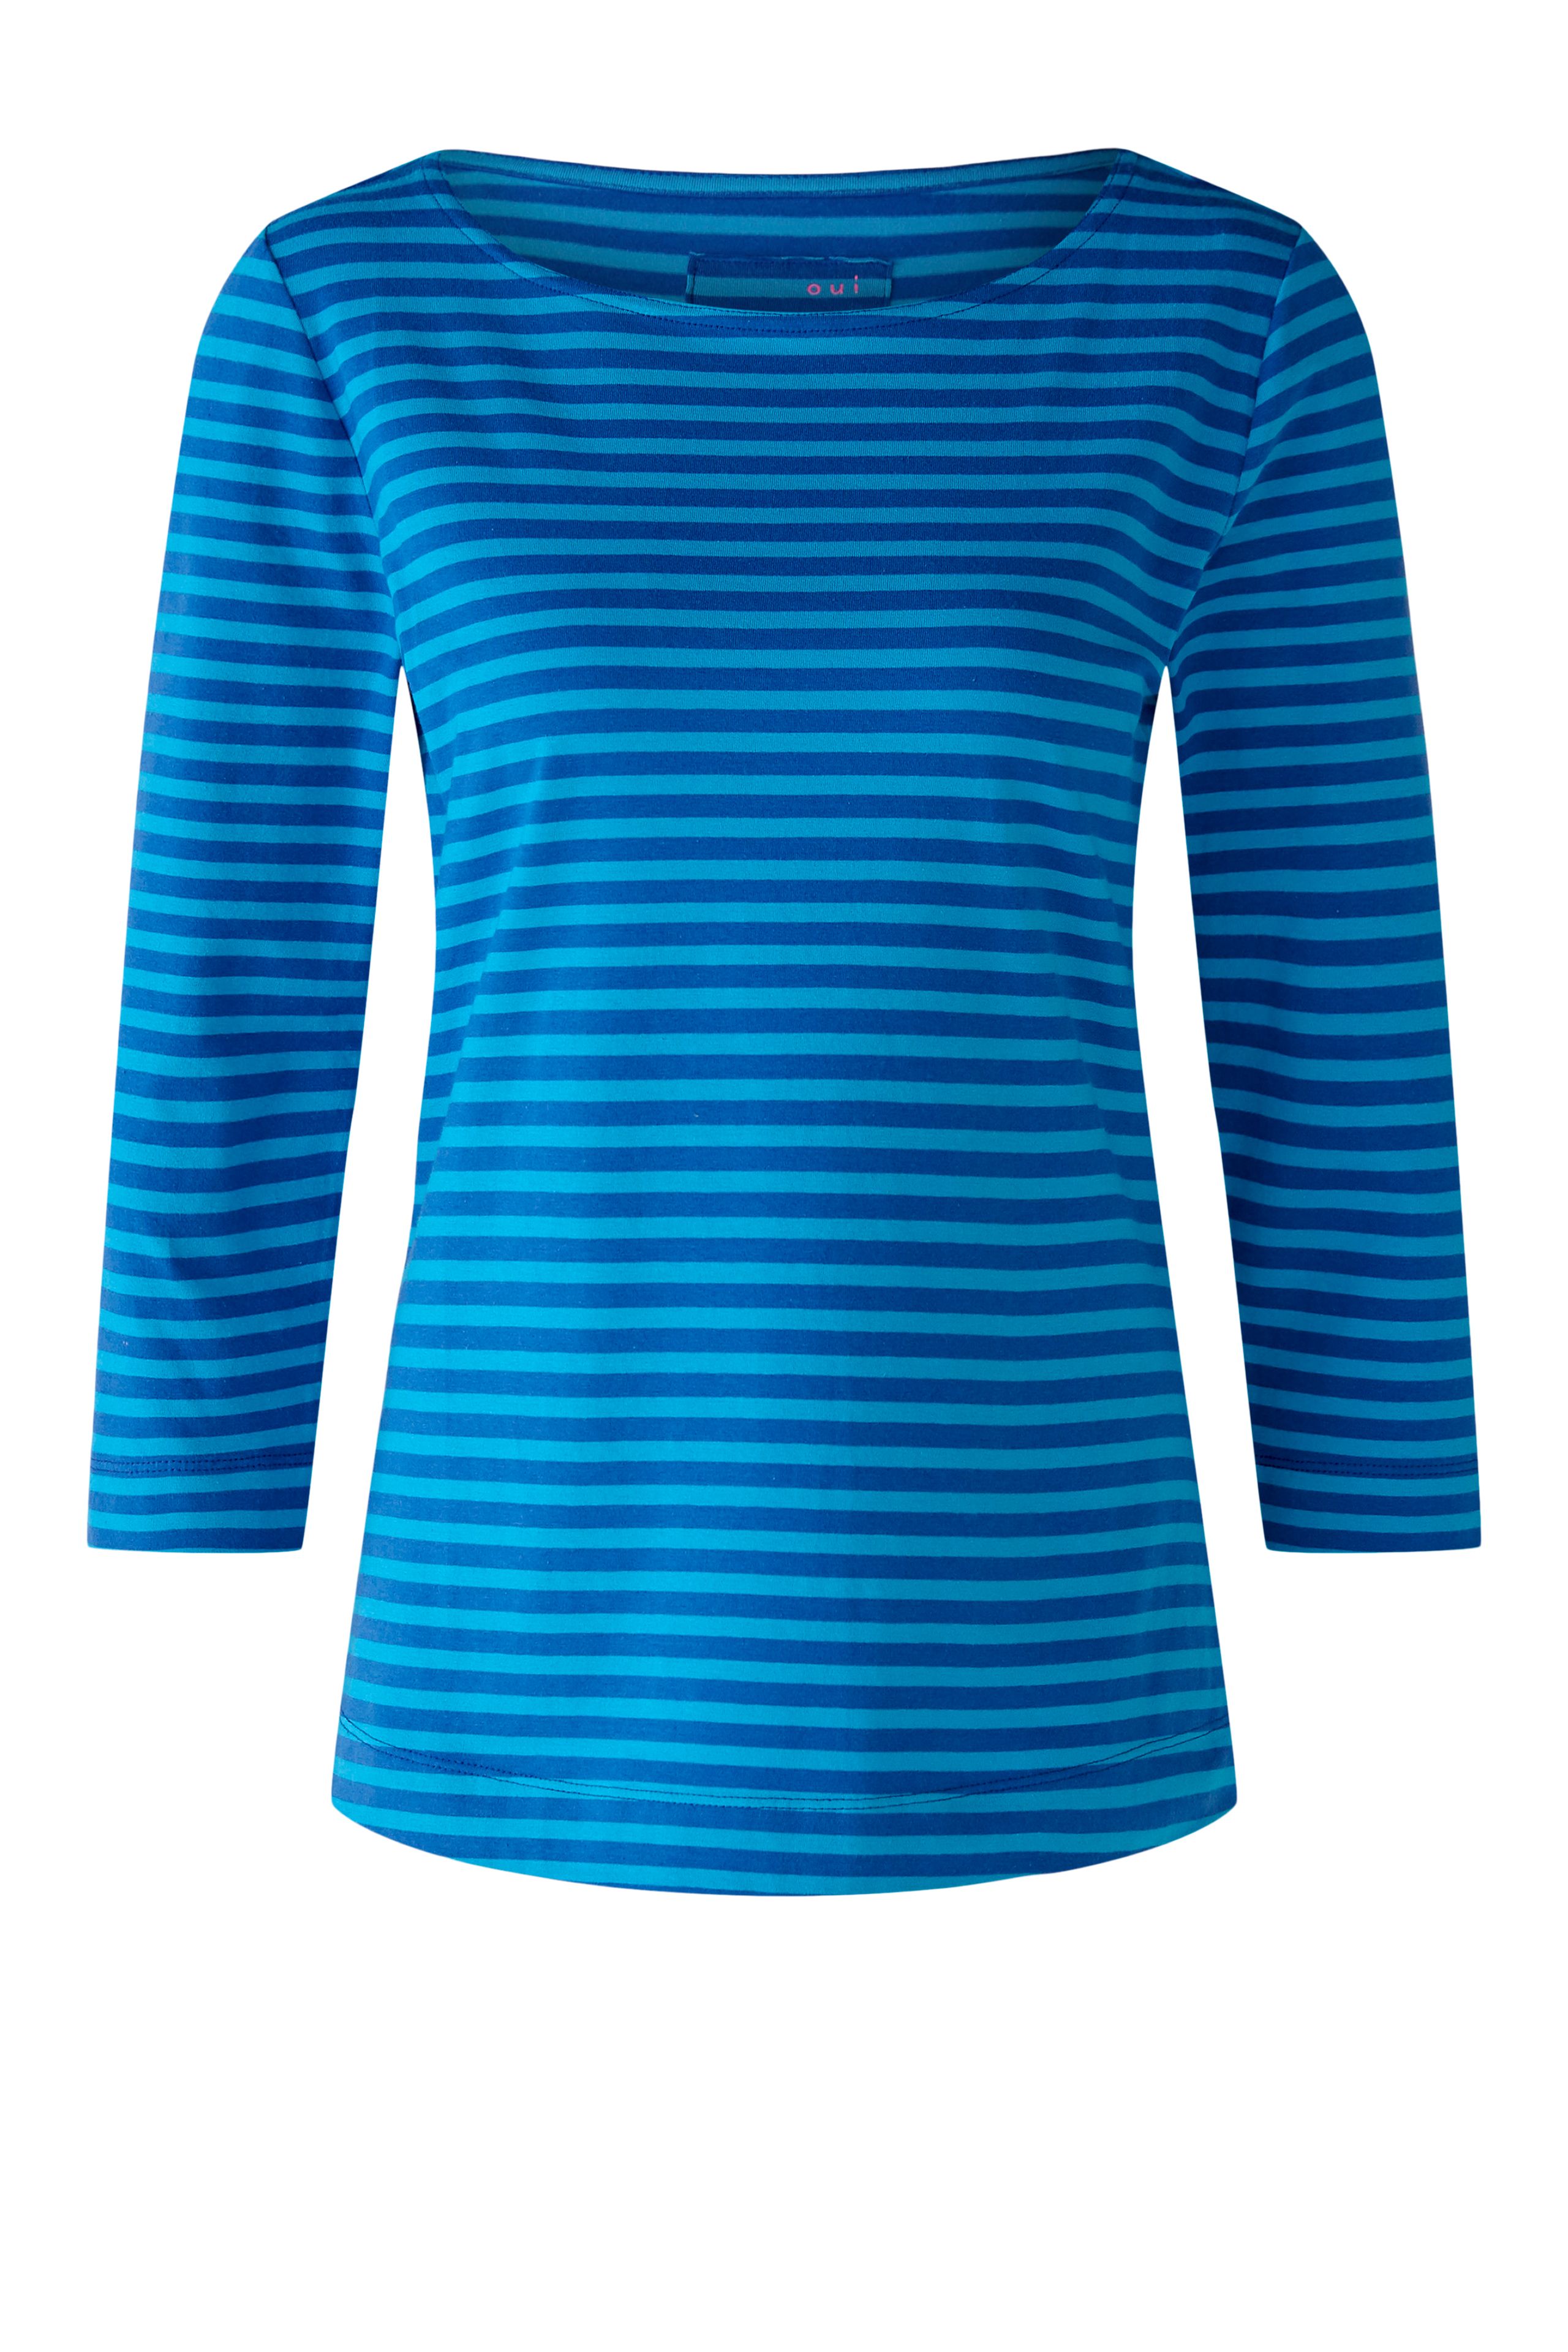 Oui T-Shirt 3/4 Arm  fine Stripe 38 blue